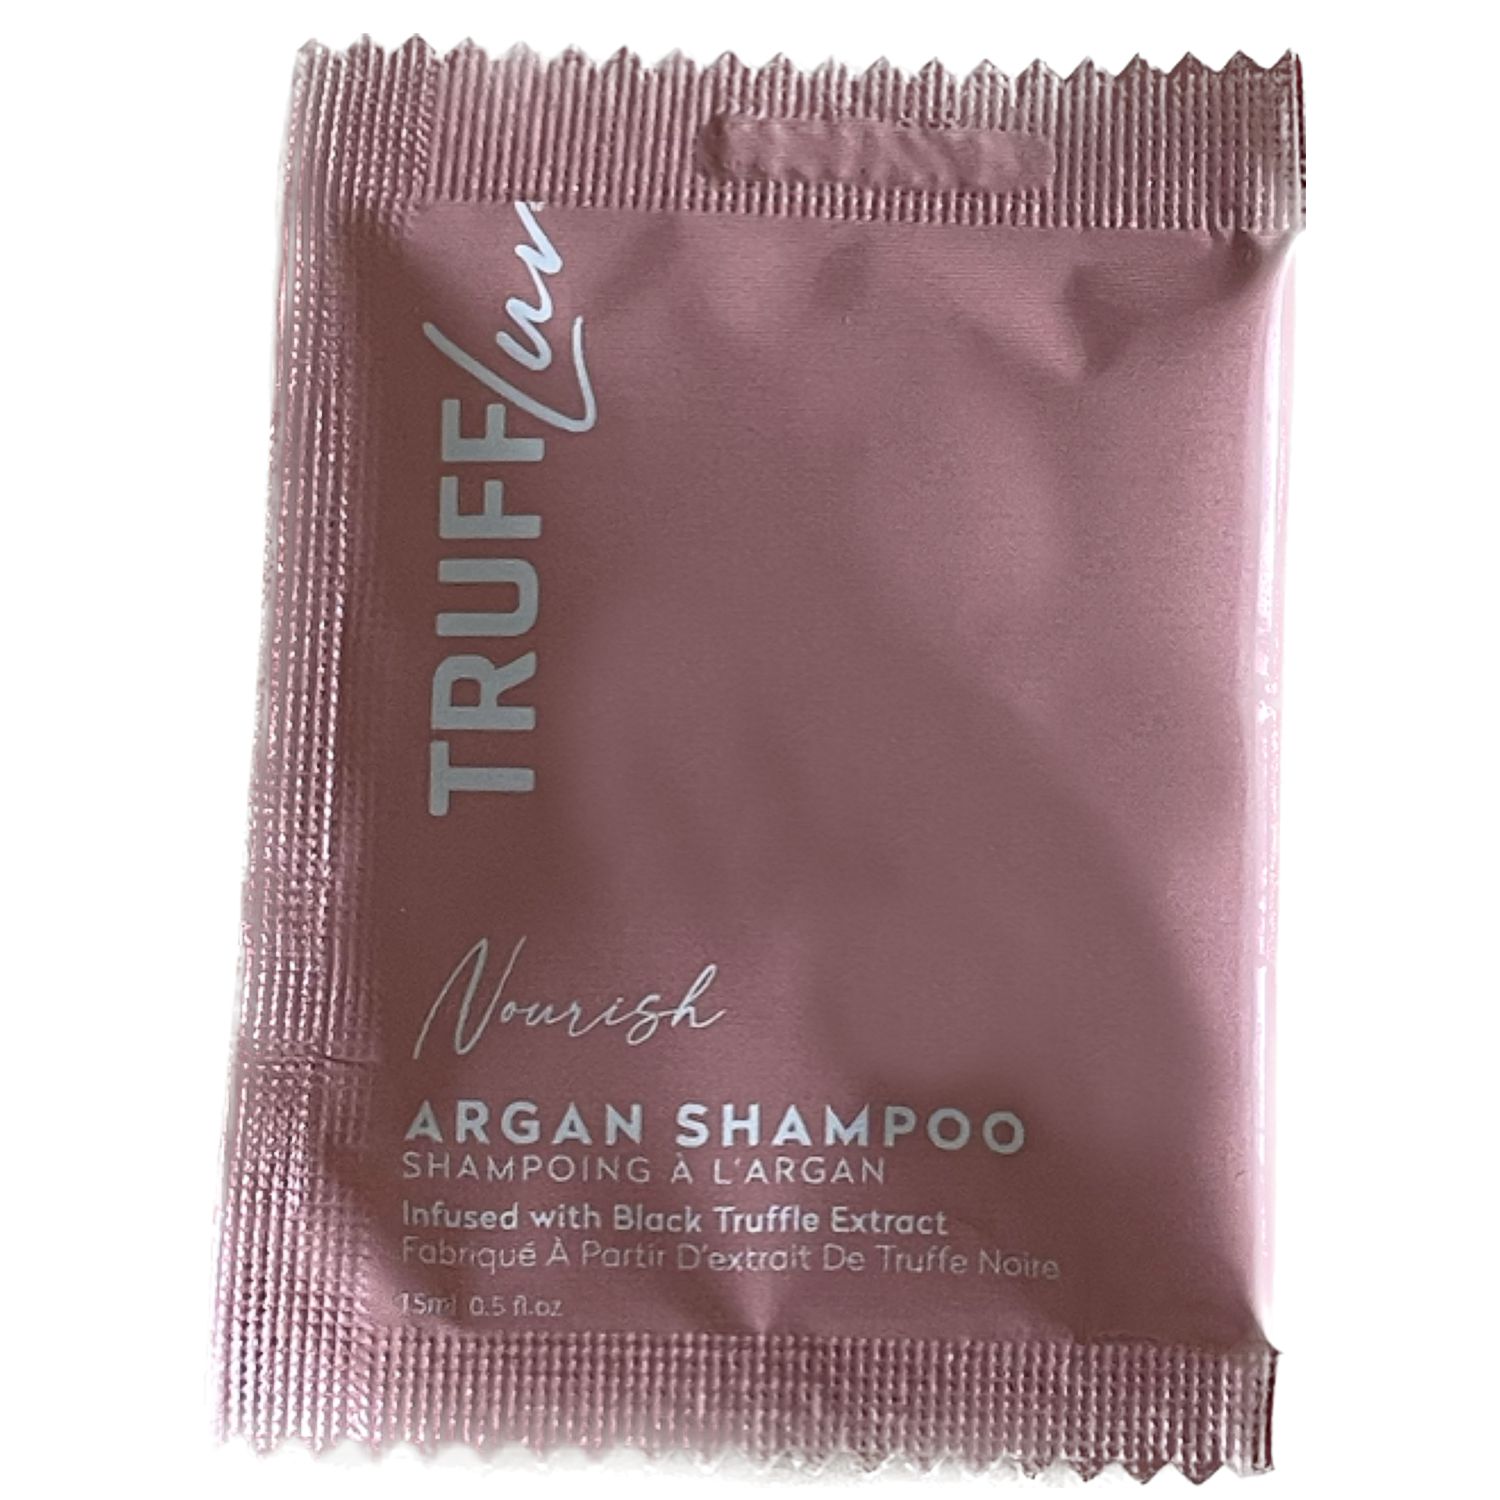 TruffLuv NOURISH Argan Shampoo 15 ml Sachet